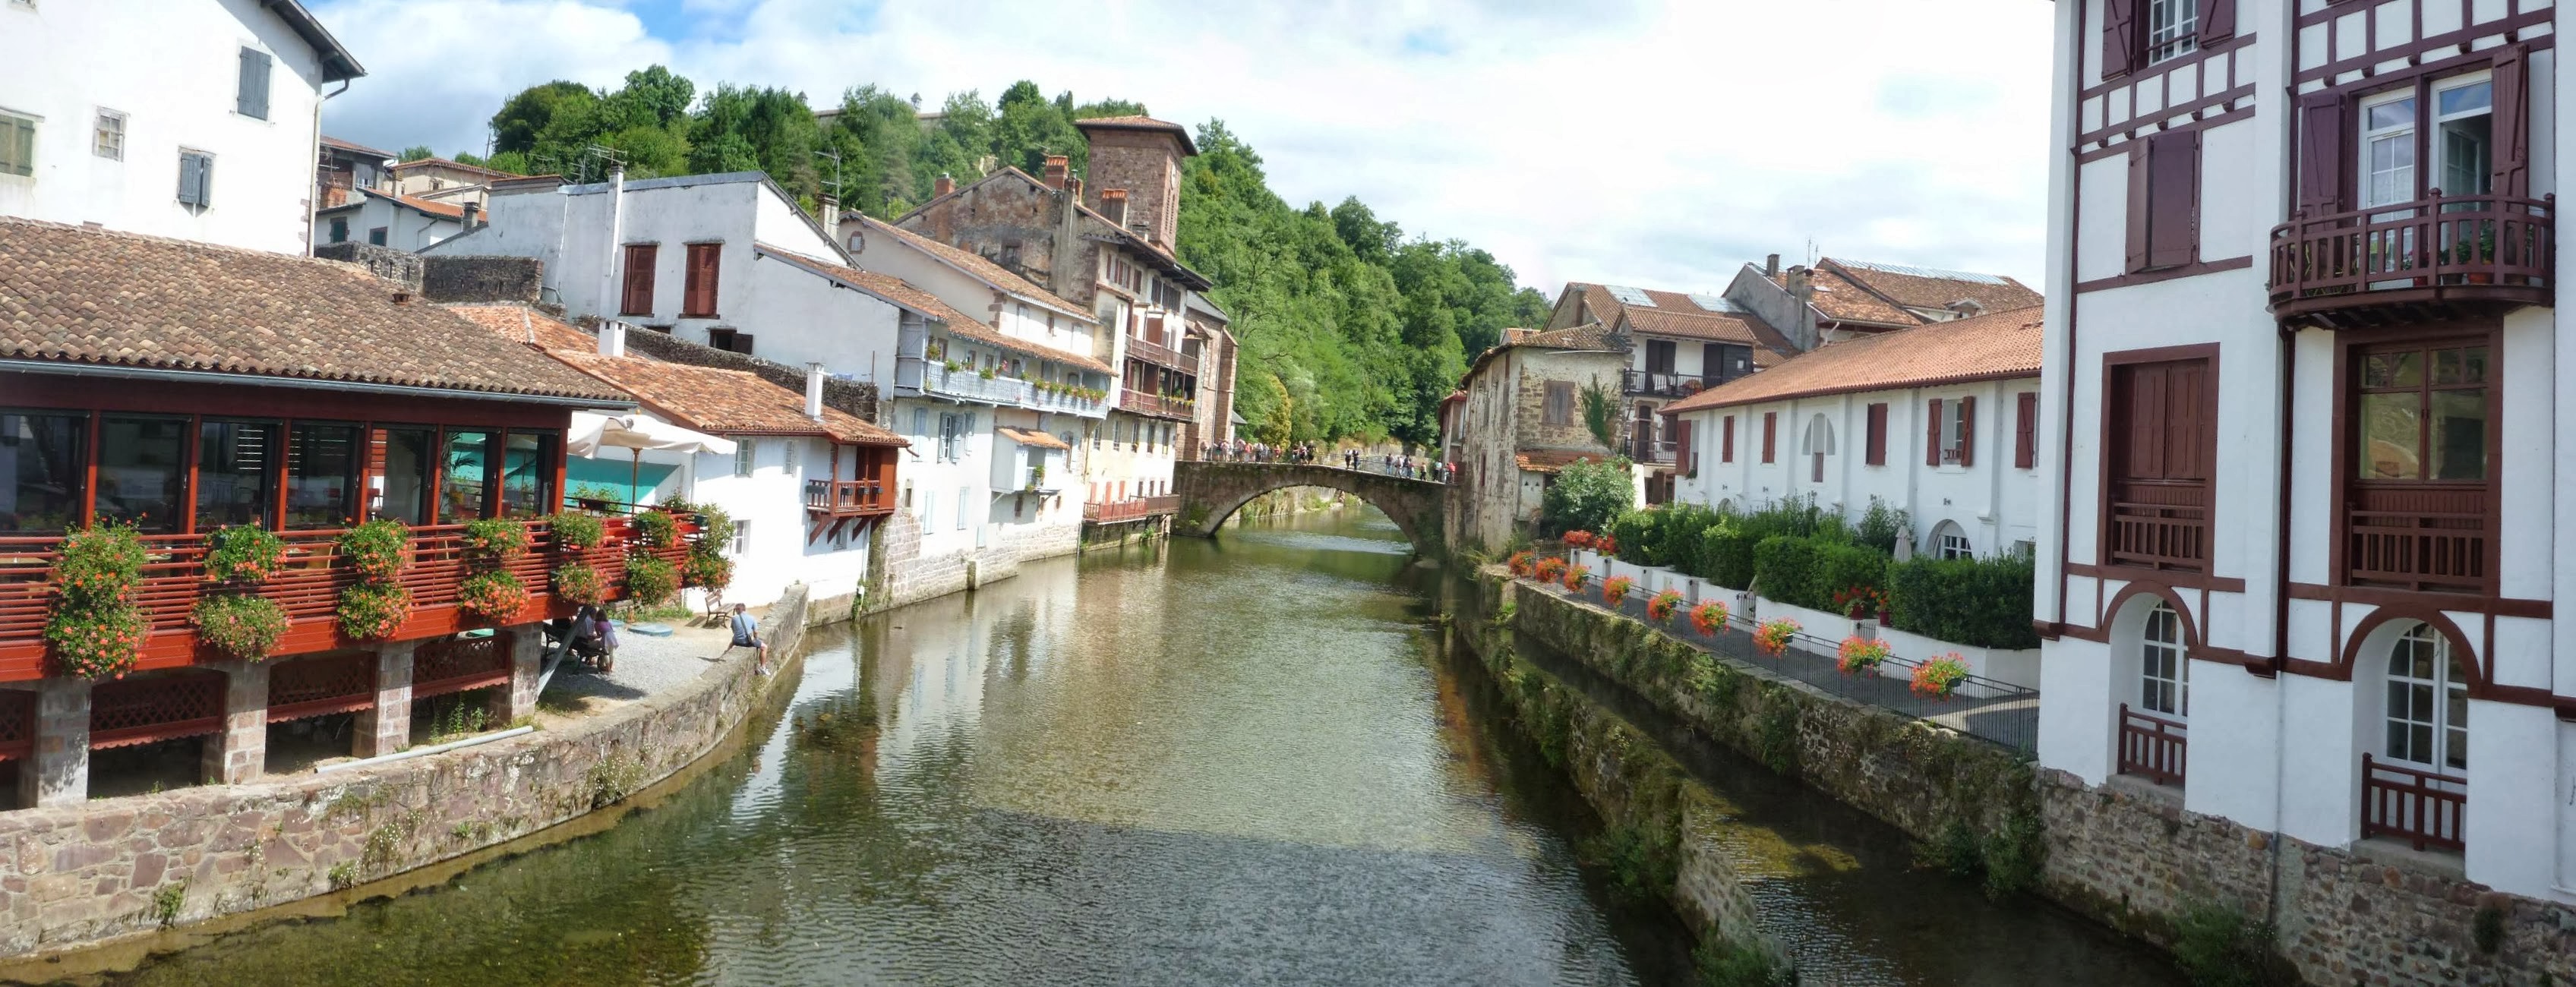 A bridge in Saint-Jean-Pied-de-Port village